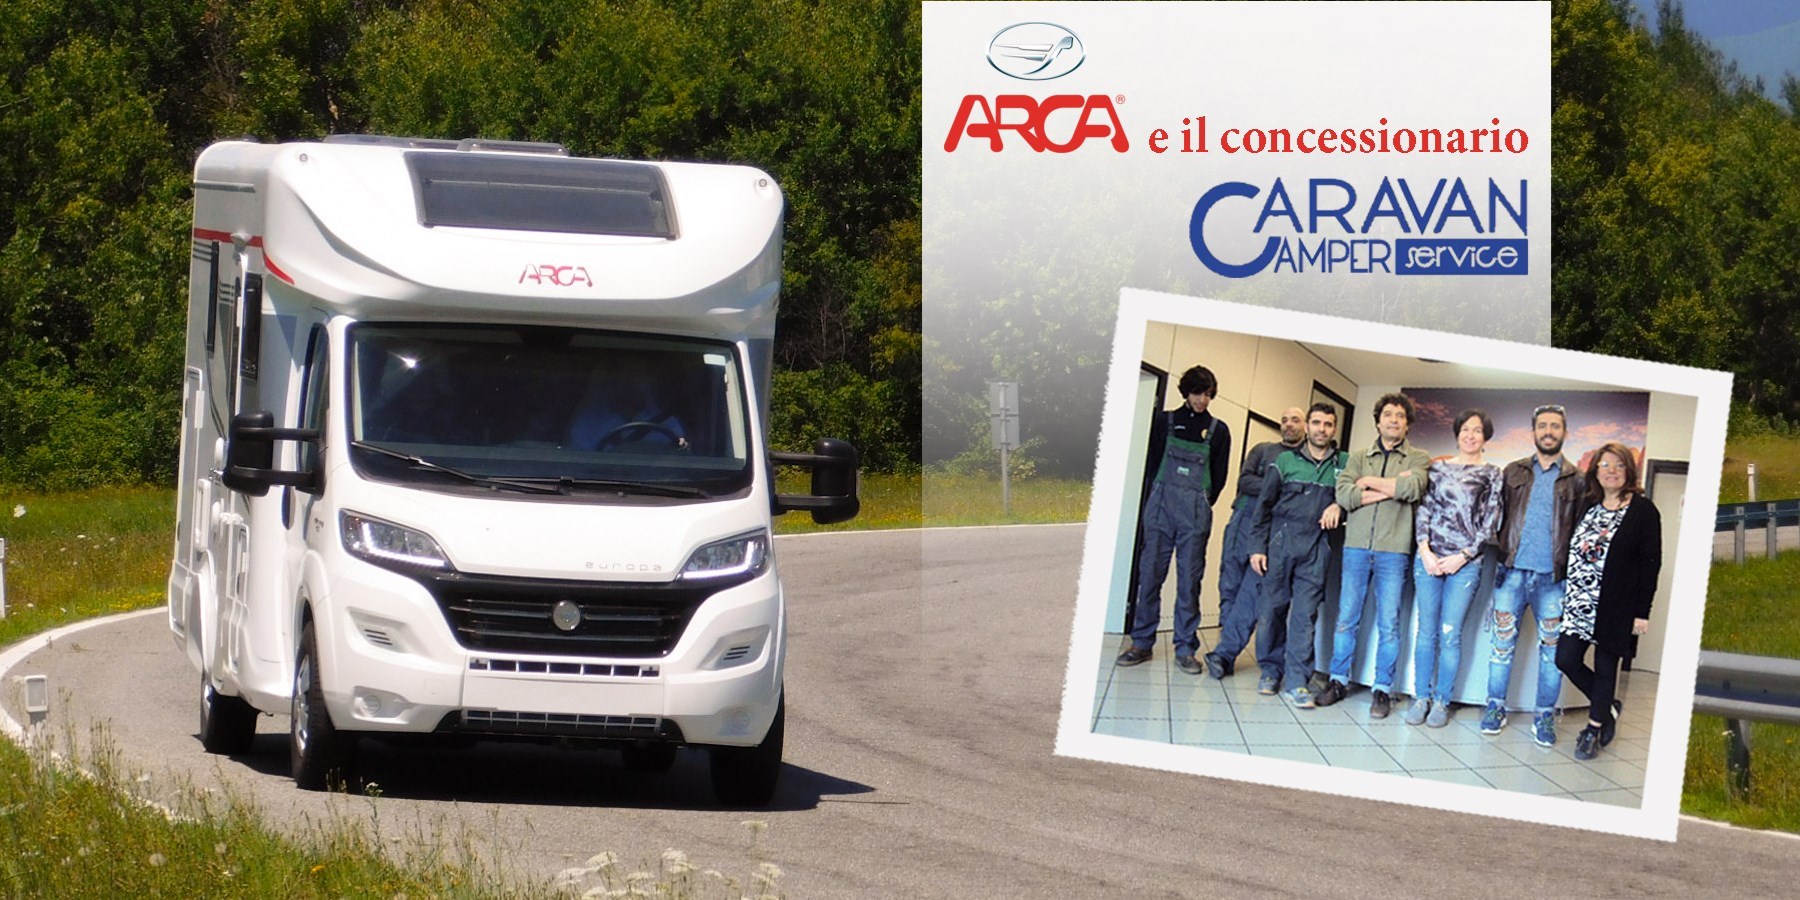 Arca e Caravan Camper Service